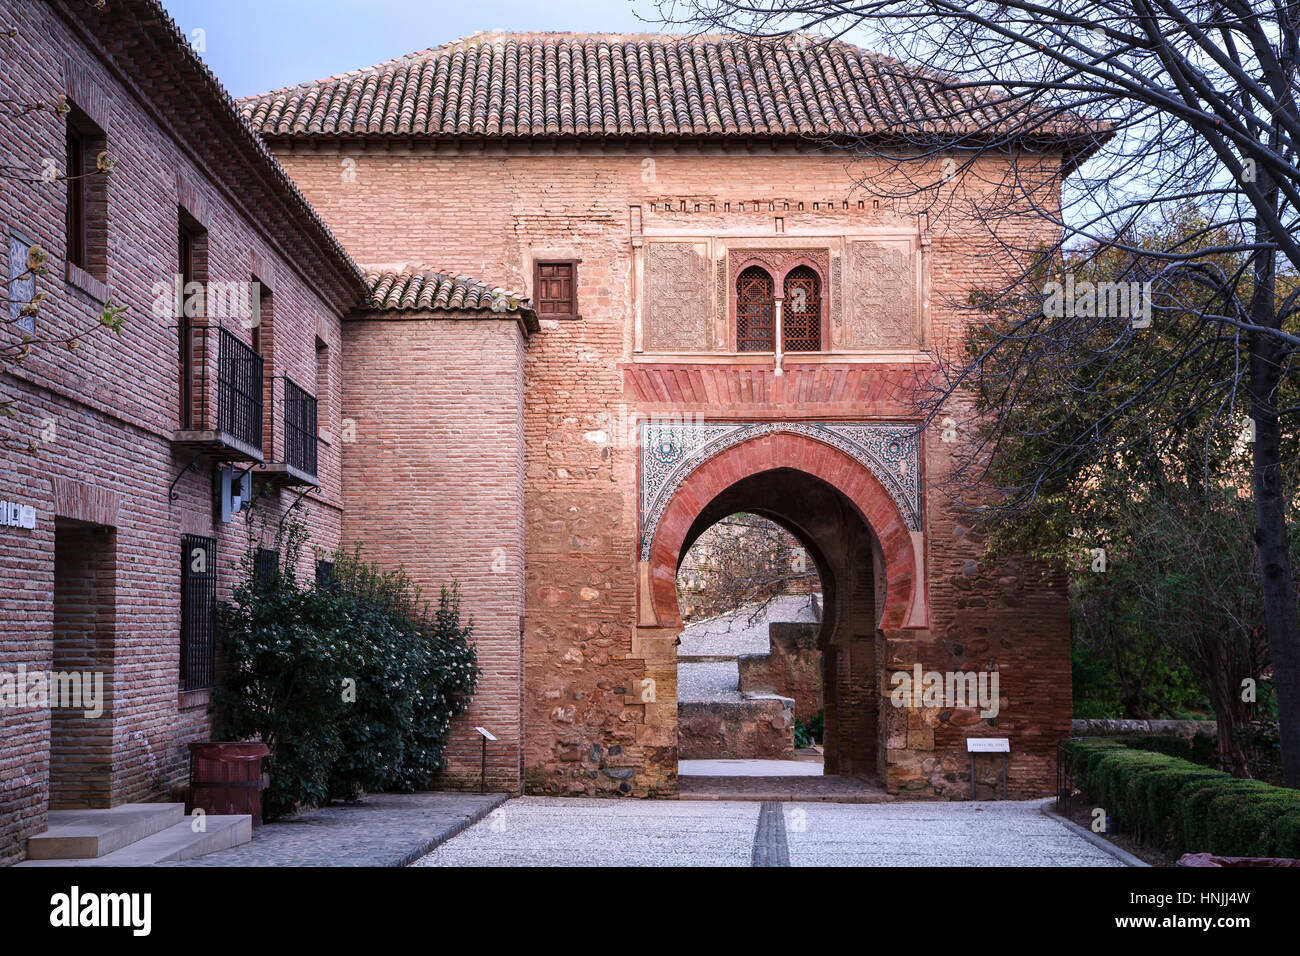 Puerta del Vino (Wine Gate), The Alhambra, Granada, Spain Stock Photo